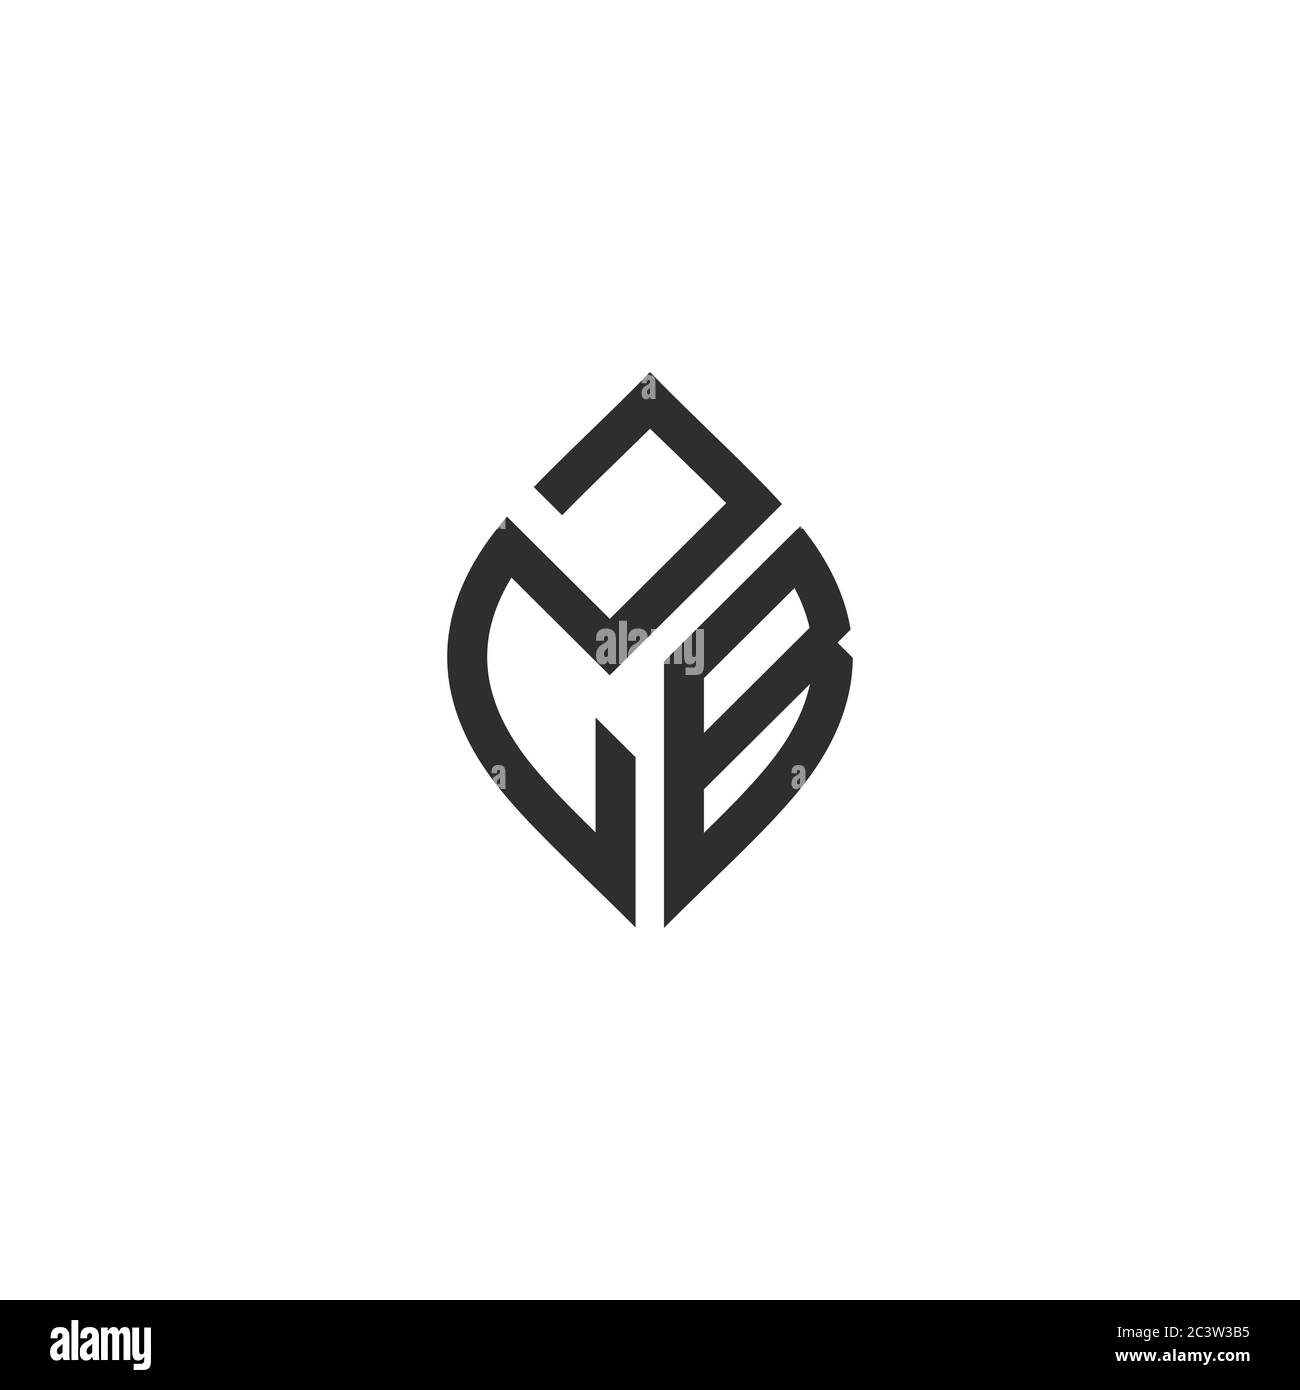 ZB Logo monogram isolated on circle element design template Stock Vector  Image & Art - Alamy